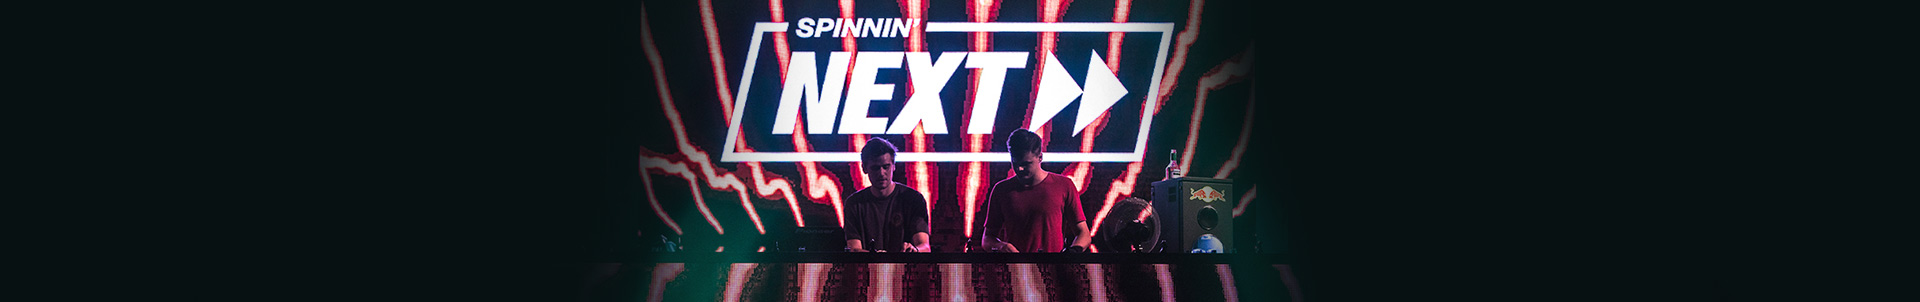 Spinnin' Records launches talent platform Spinnin' NEXT